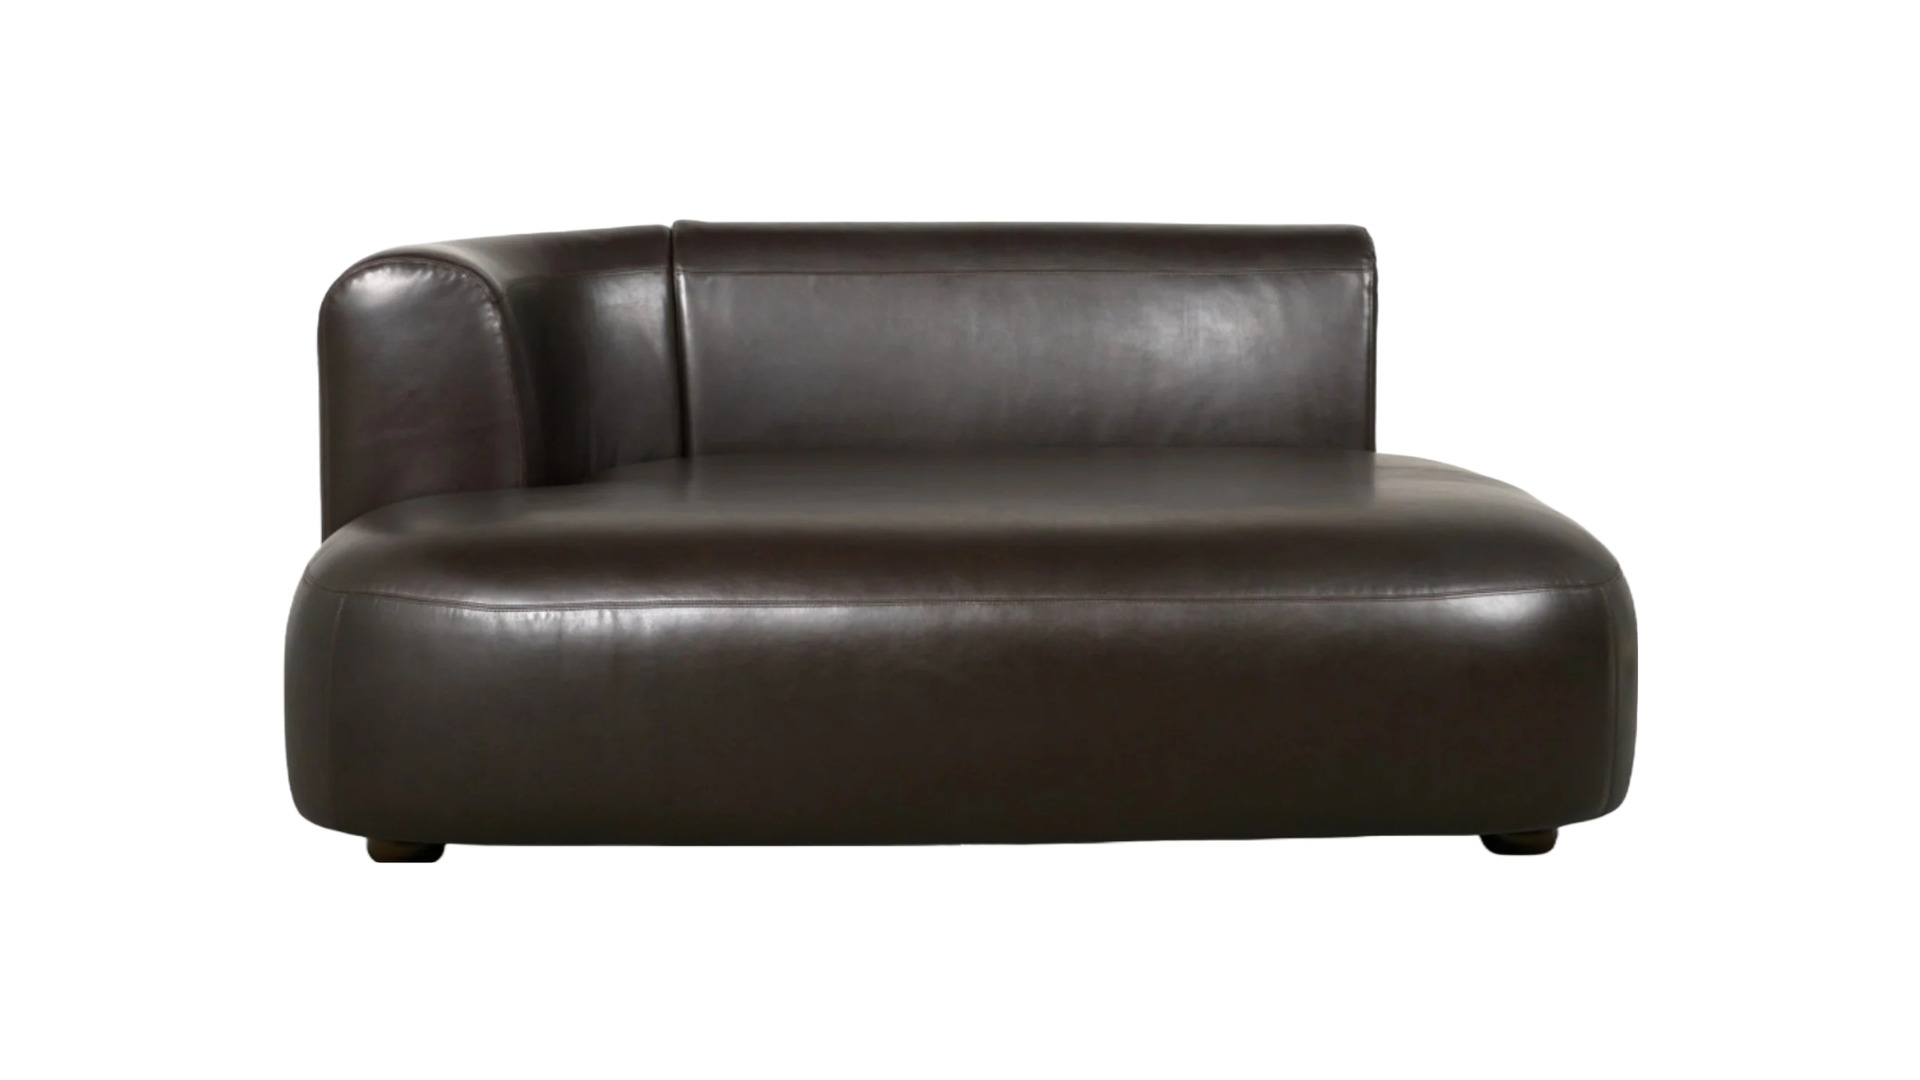 Baxter Clara modulaire bank sofa bench Hora Barneveld 13.jpg